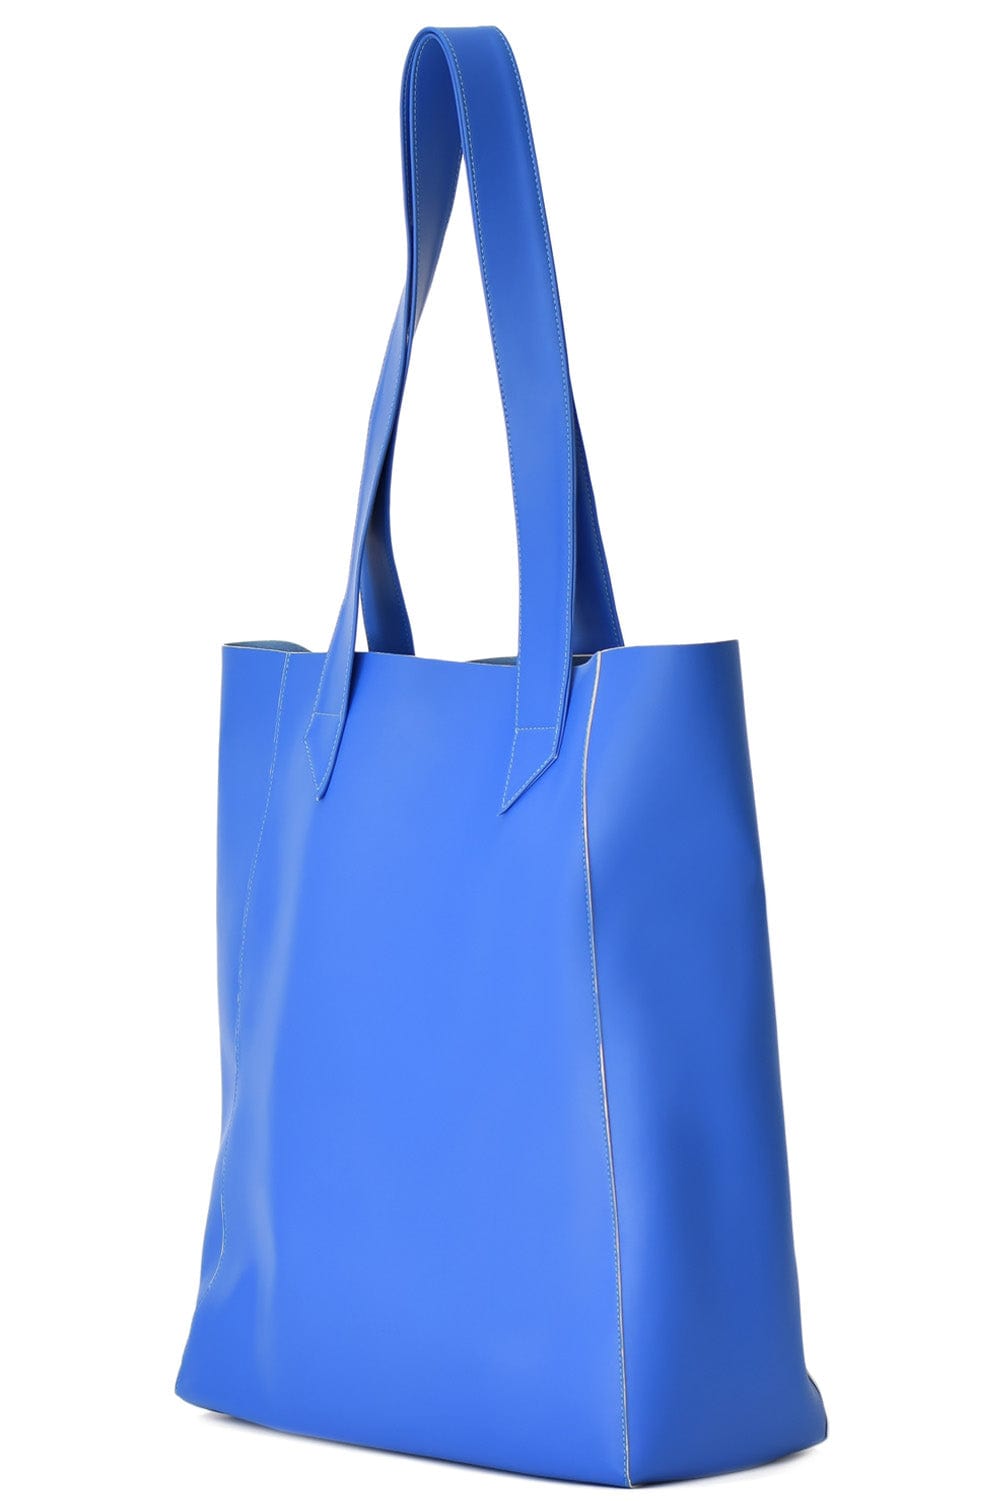 Canussa Tote XXL Ocean Blue - Shoulder bags